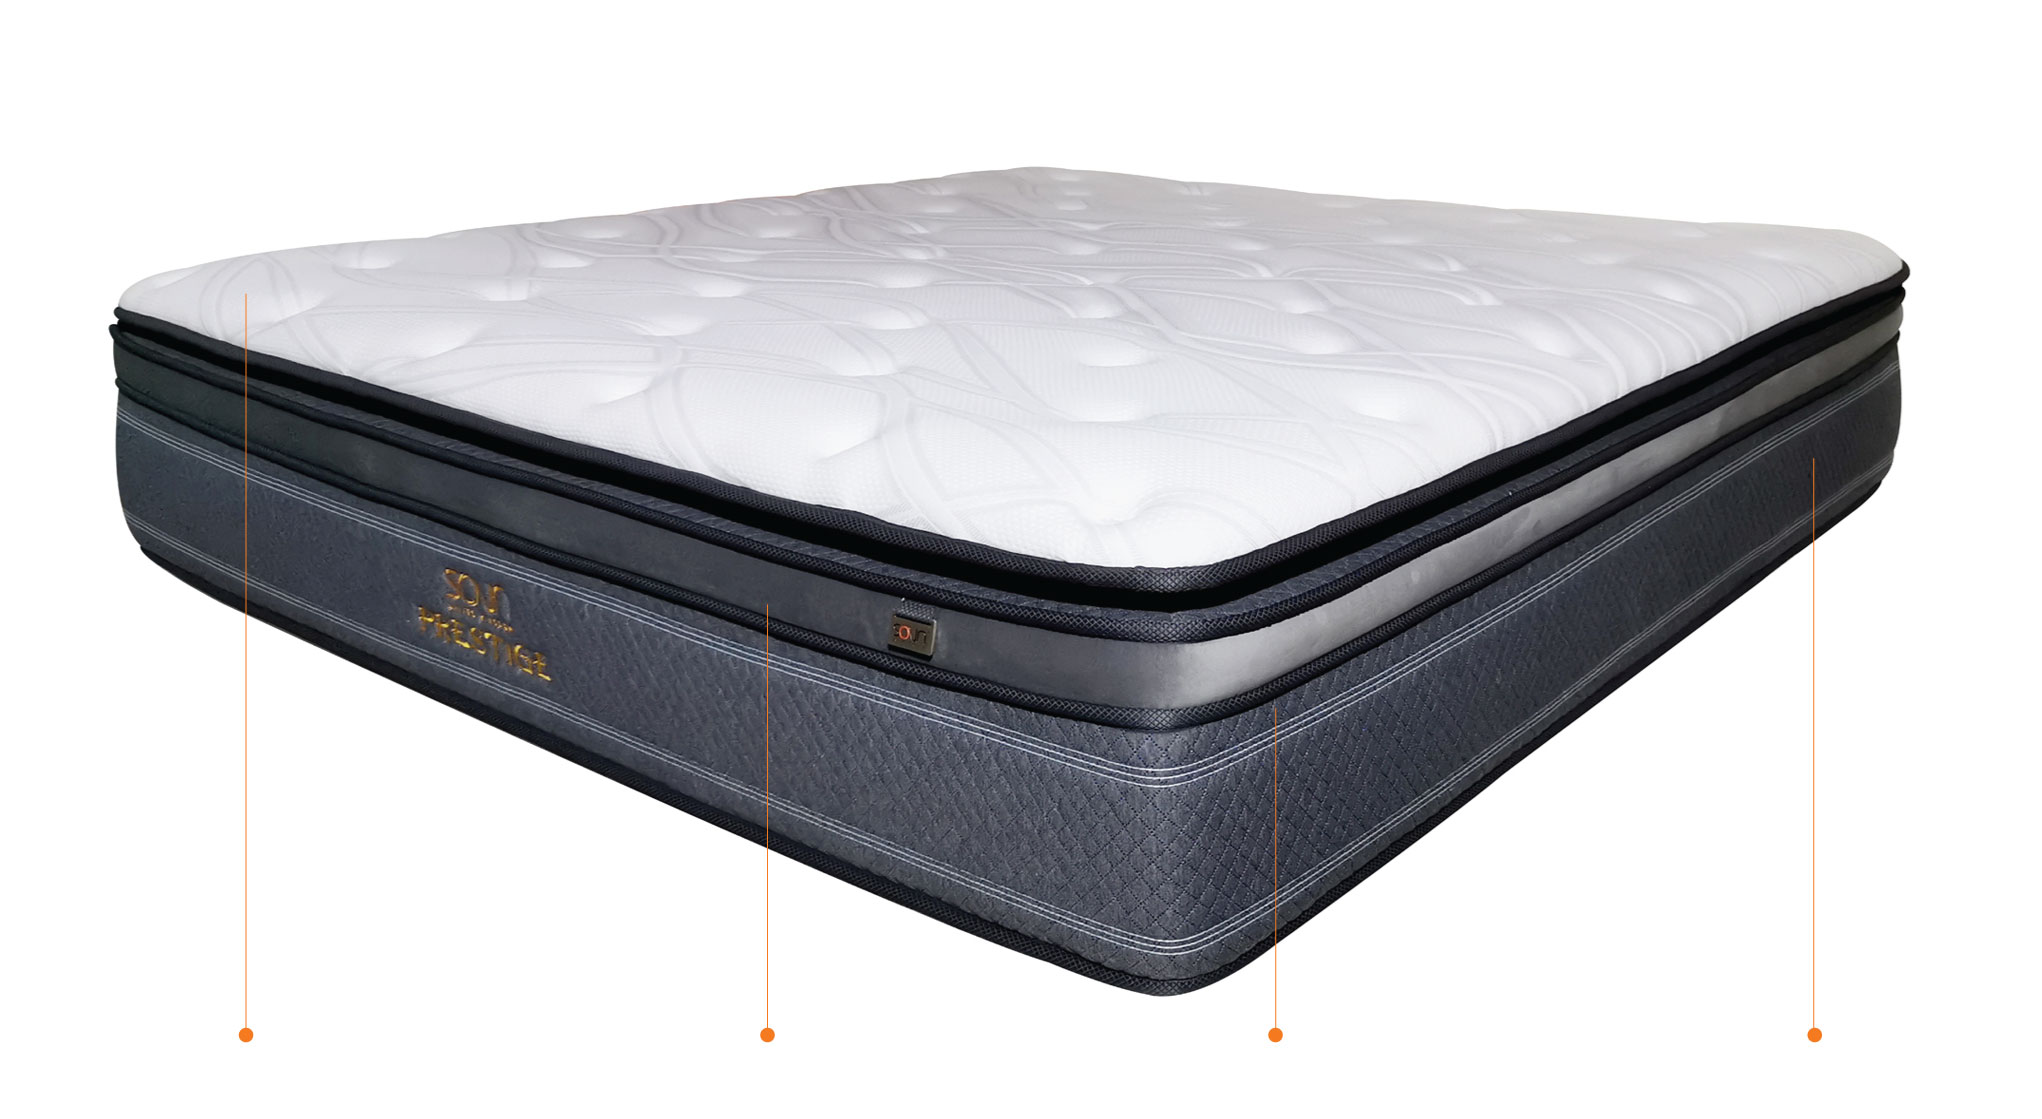 sovn mattress malaysia review